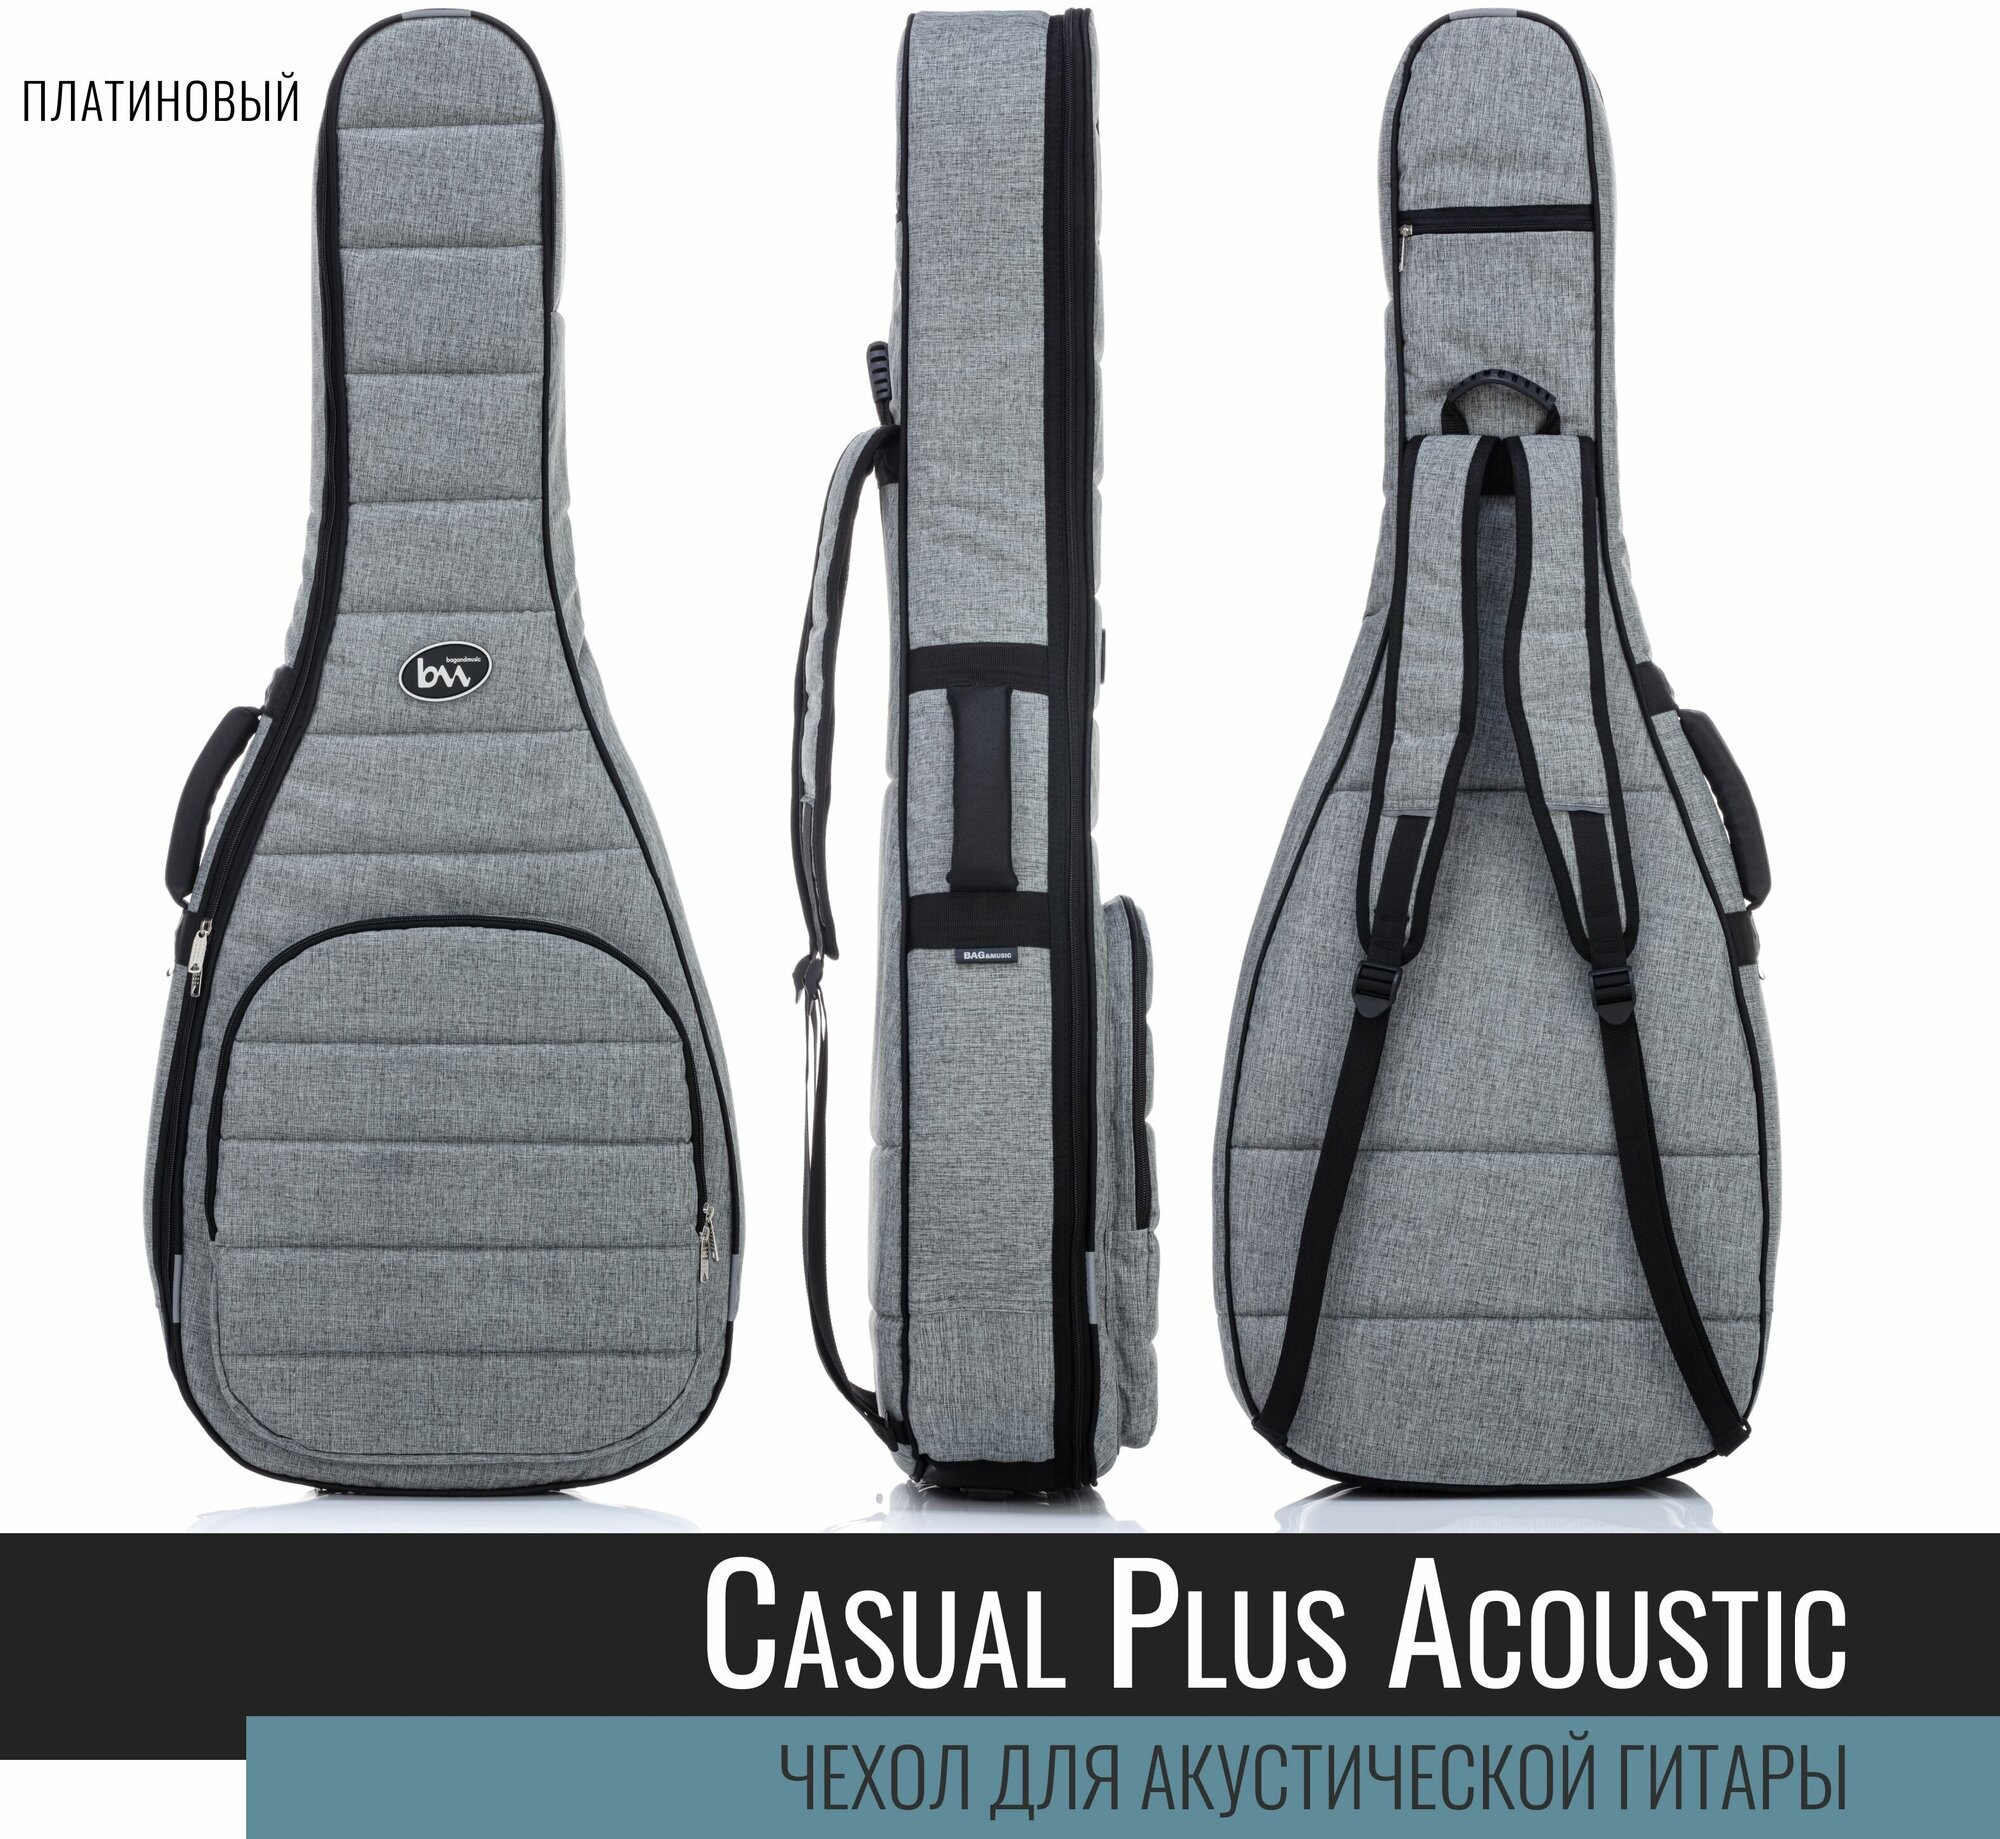 Acoustic Casual Plus